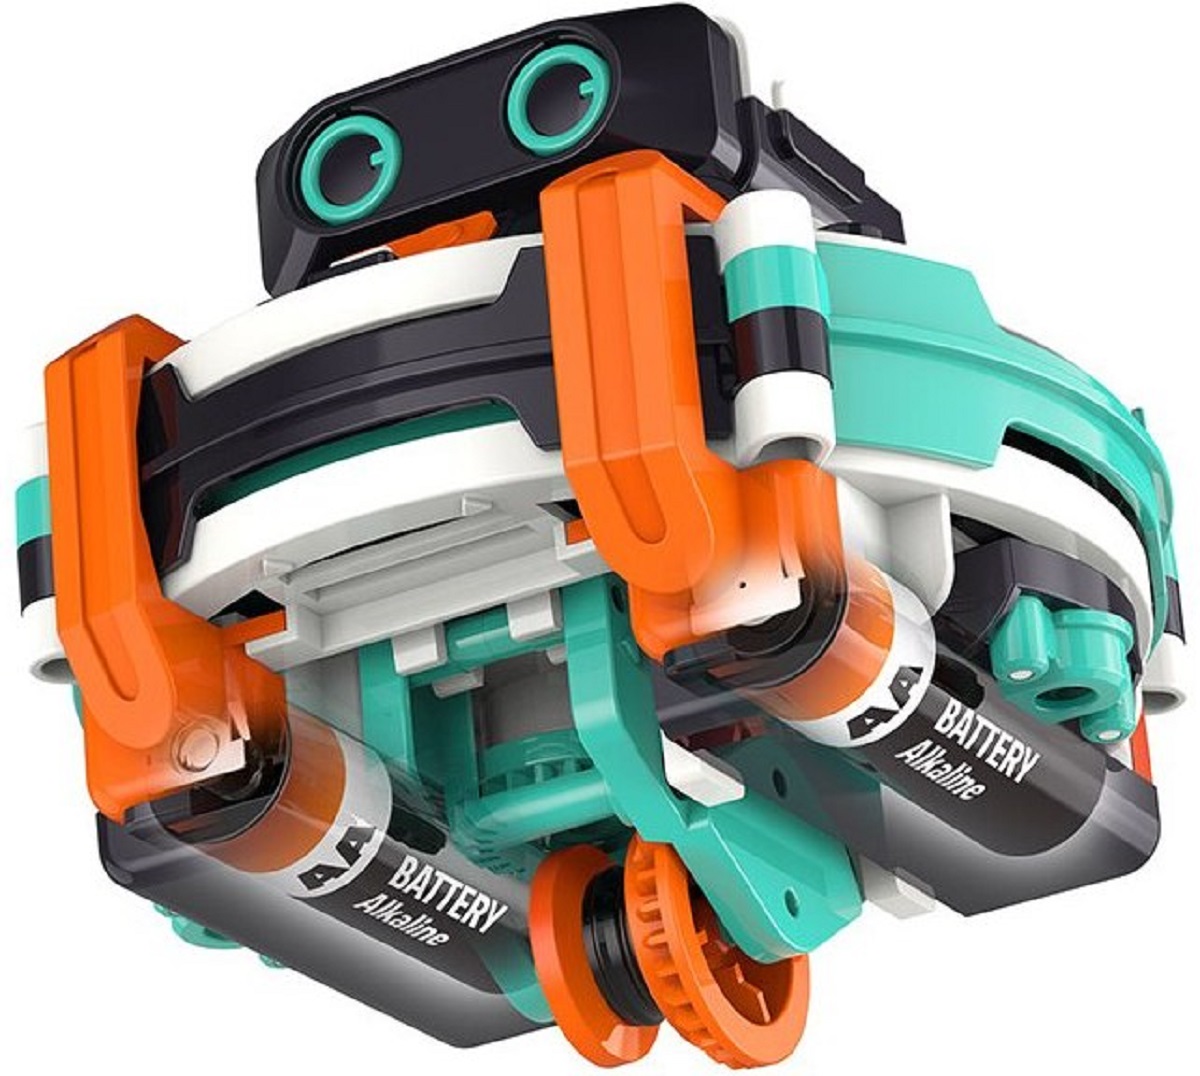 Kit constructie Robot Wabo cu sina giroscopica